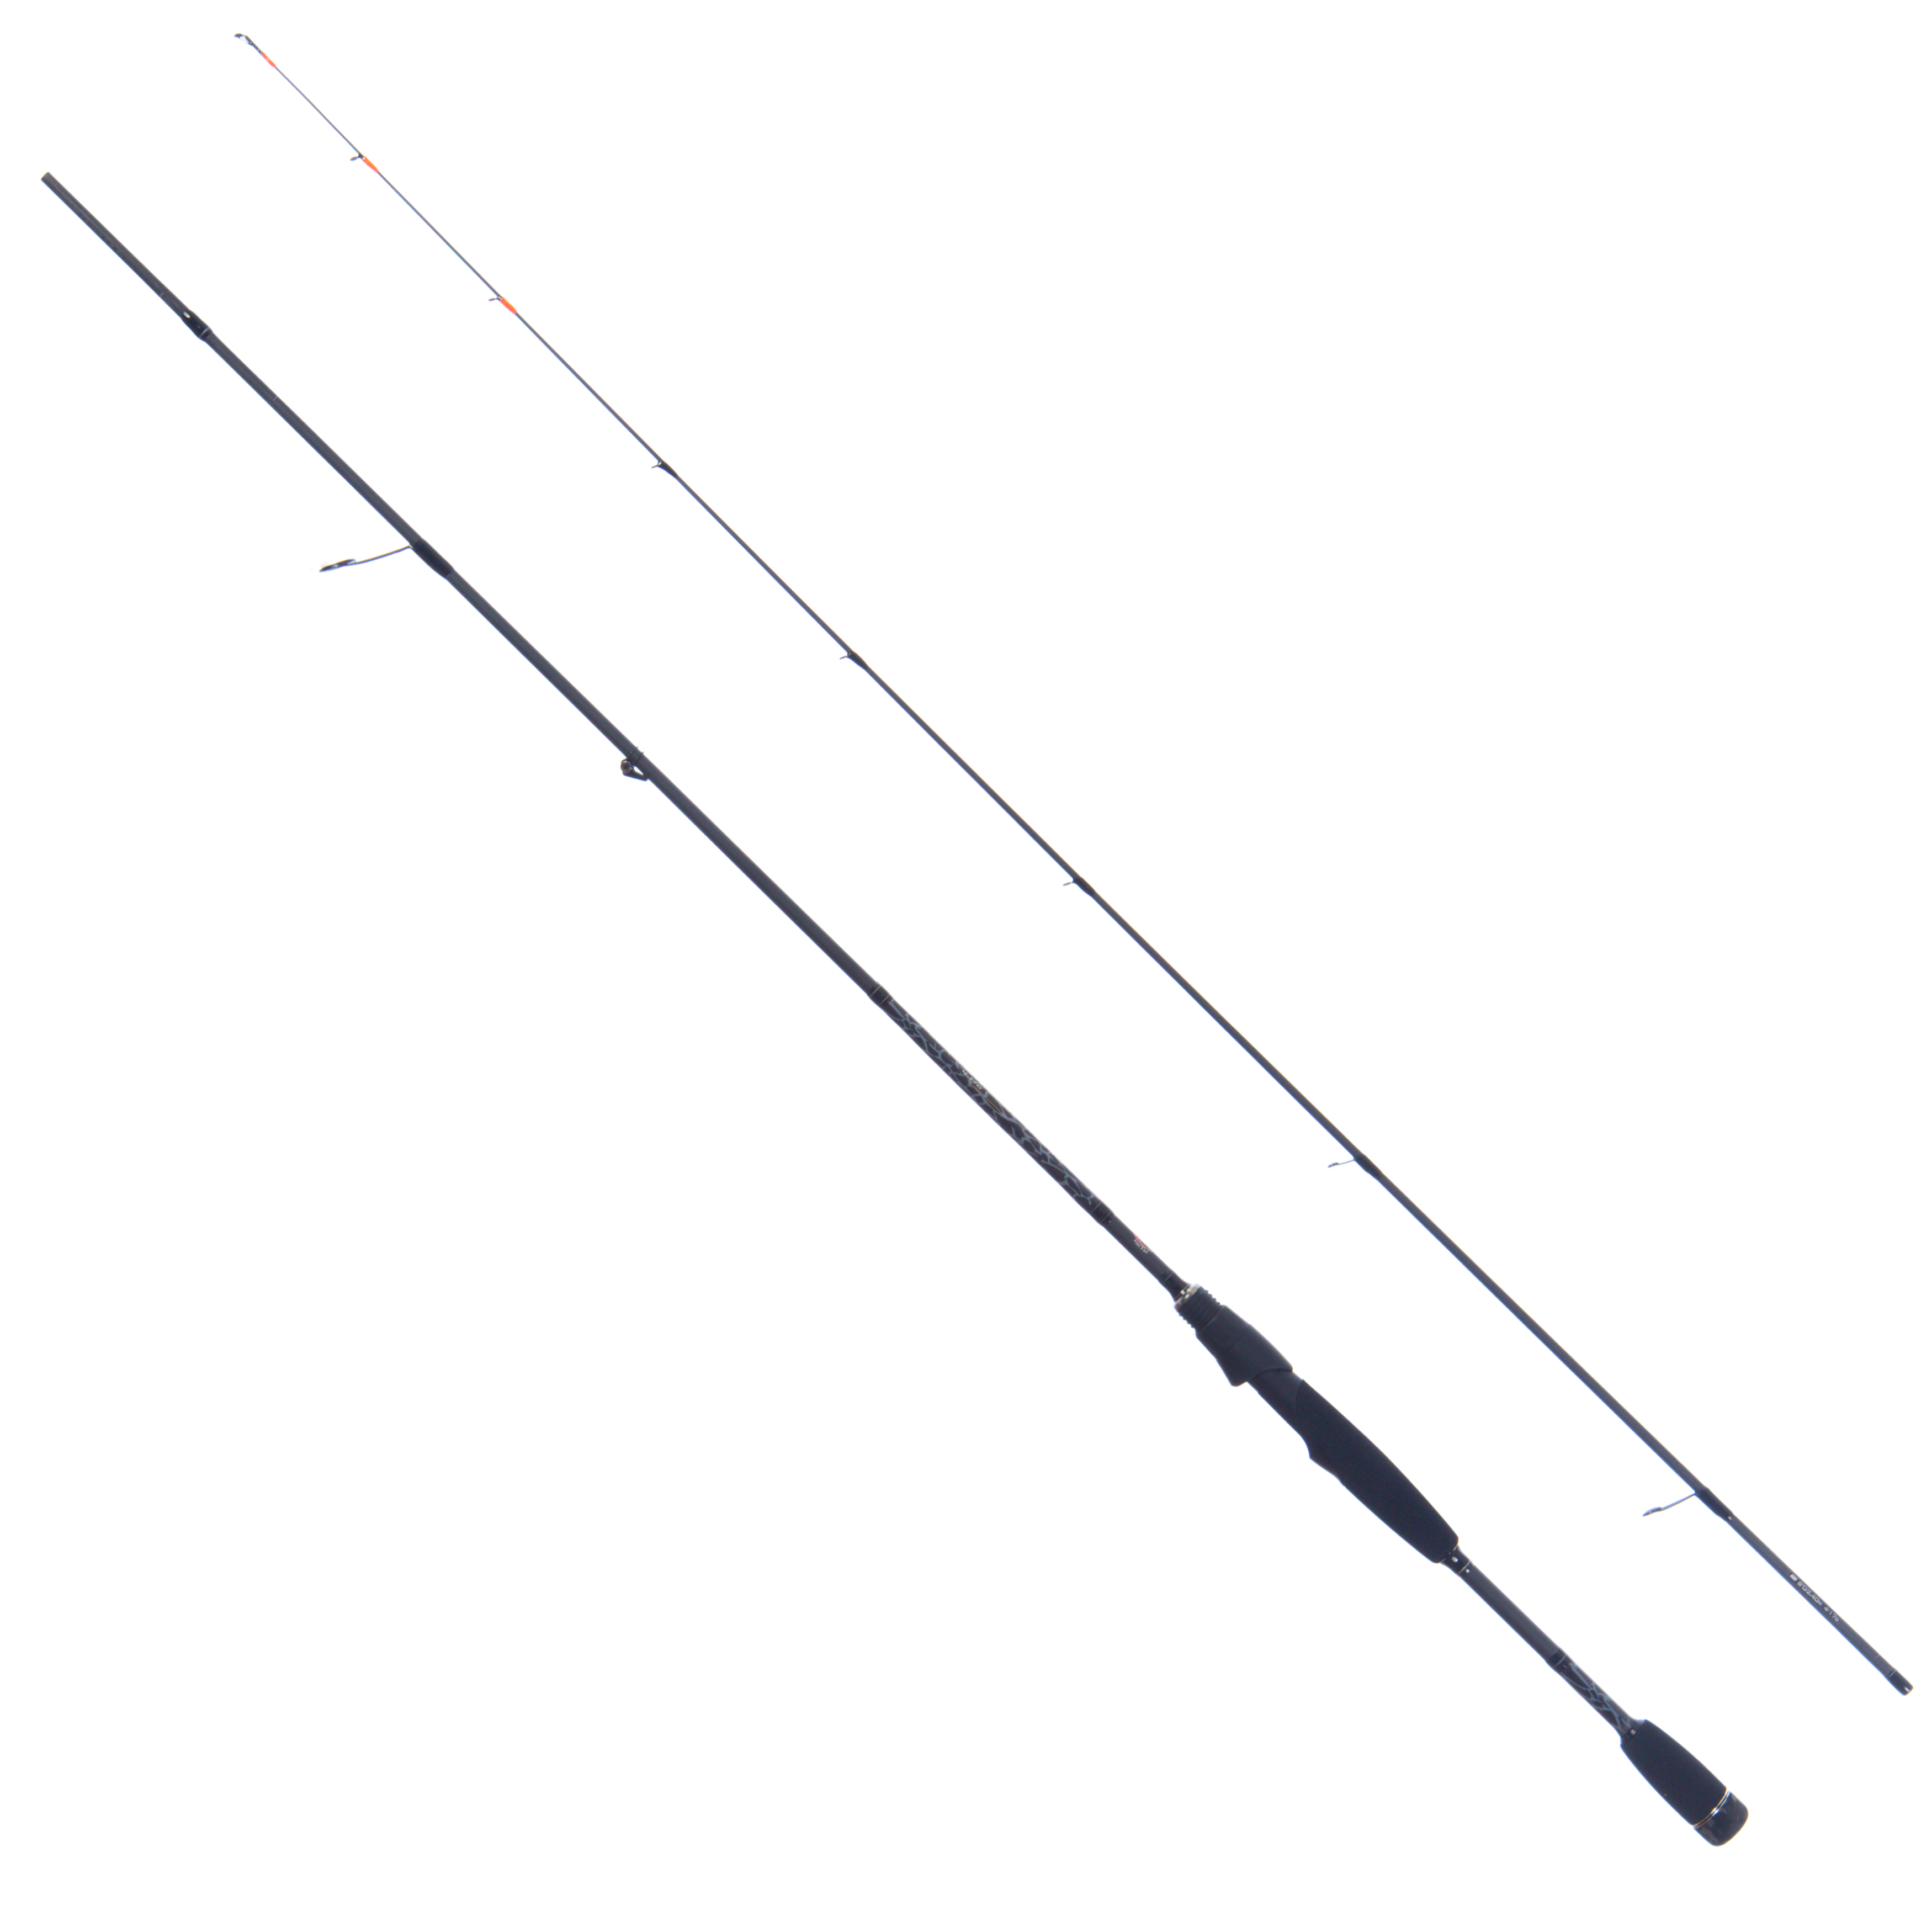 Original Abu Garcia Brand Black Max BMAX Baitcasting Lure Fishing Rod 1.98m  2.13m 2.44m M Power Carbon Spinning Fishing Stick - Price history & Review